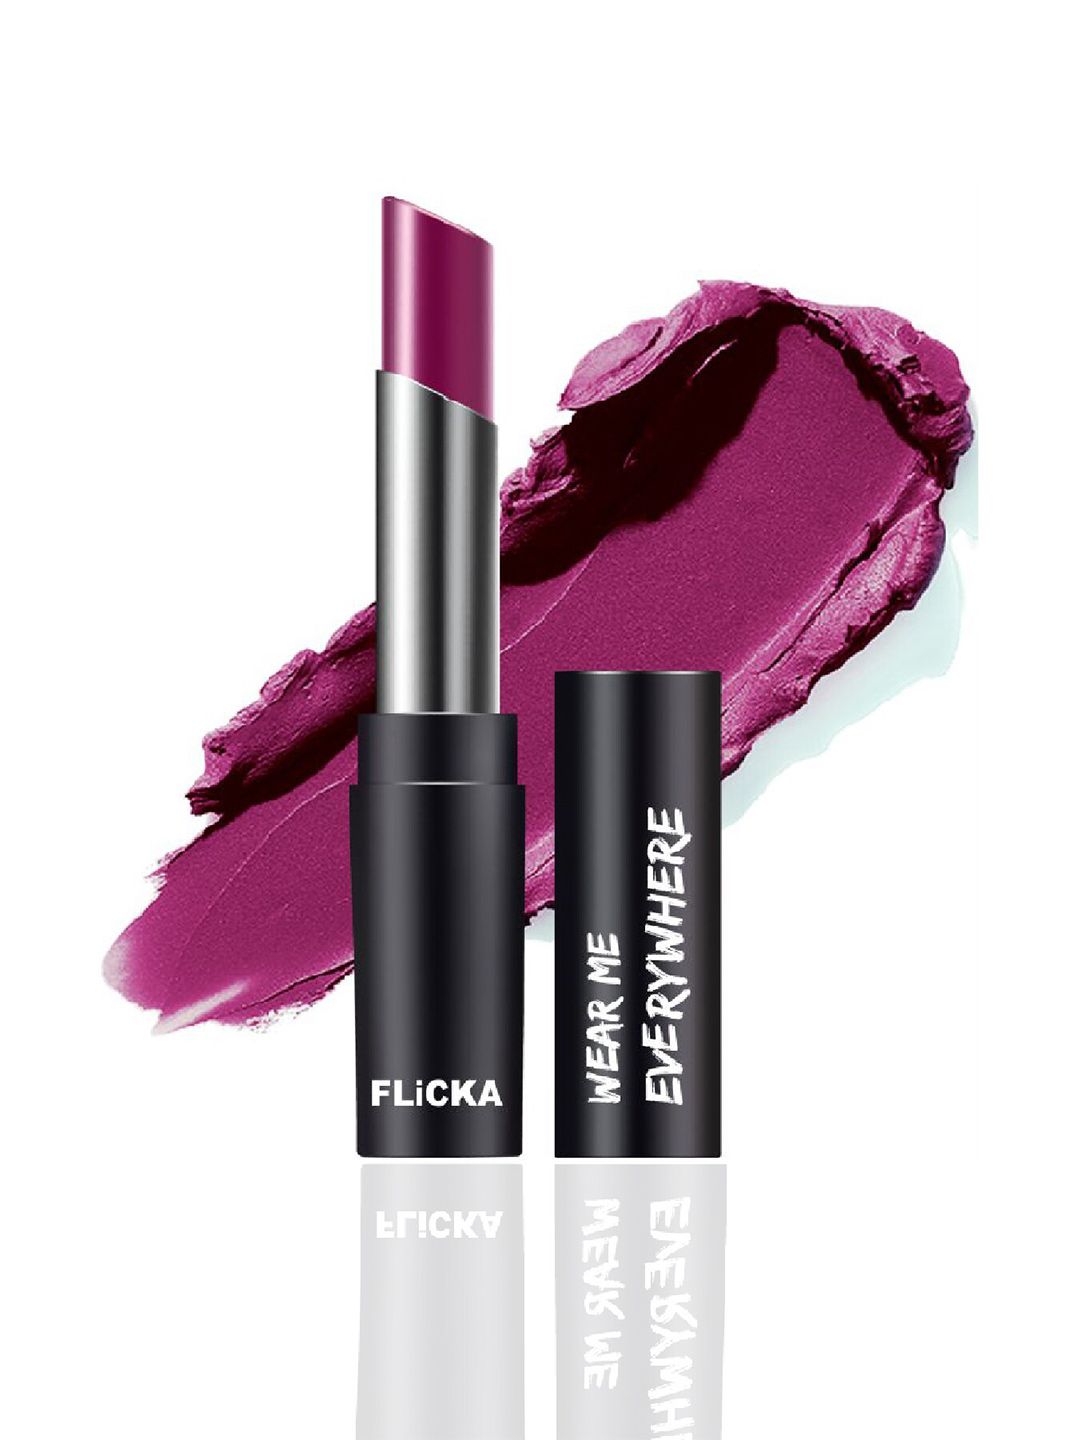 FLiCKA Wear Me Everywhere Creamy Matte Lipstick - Spiritual Purple 23 Price in India